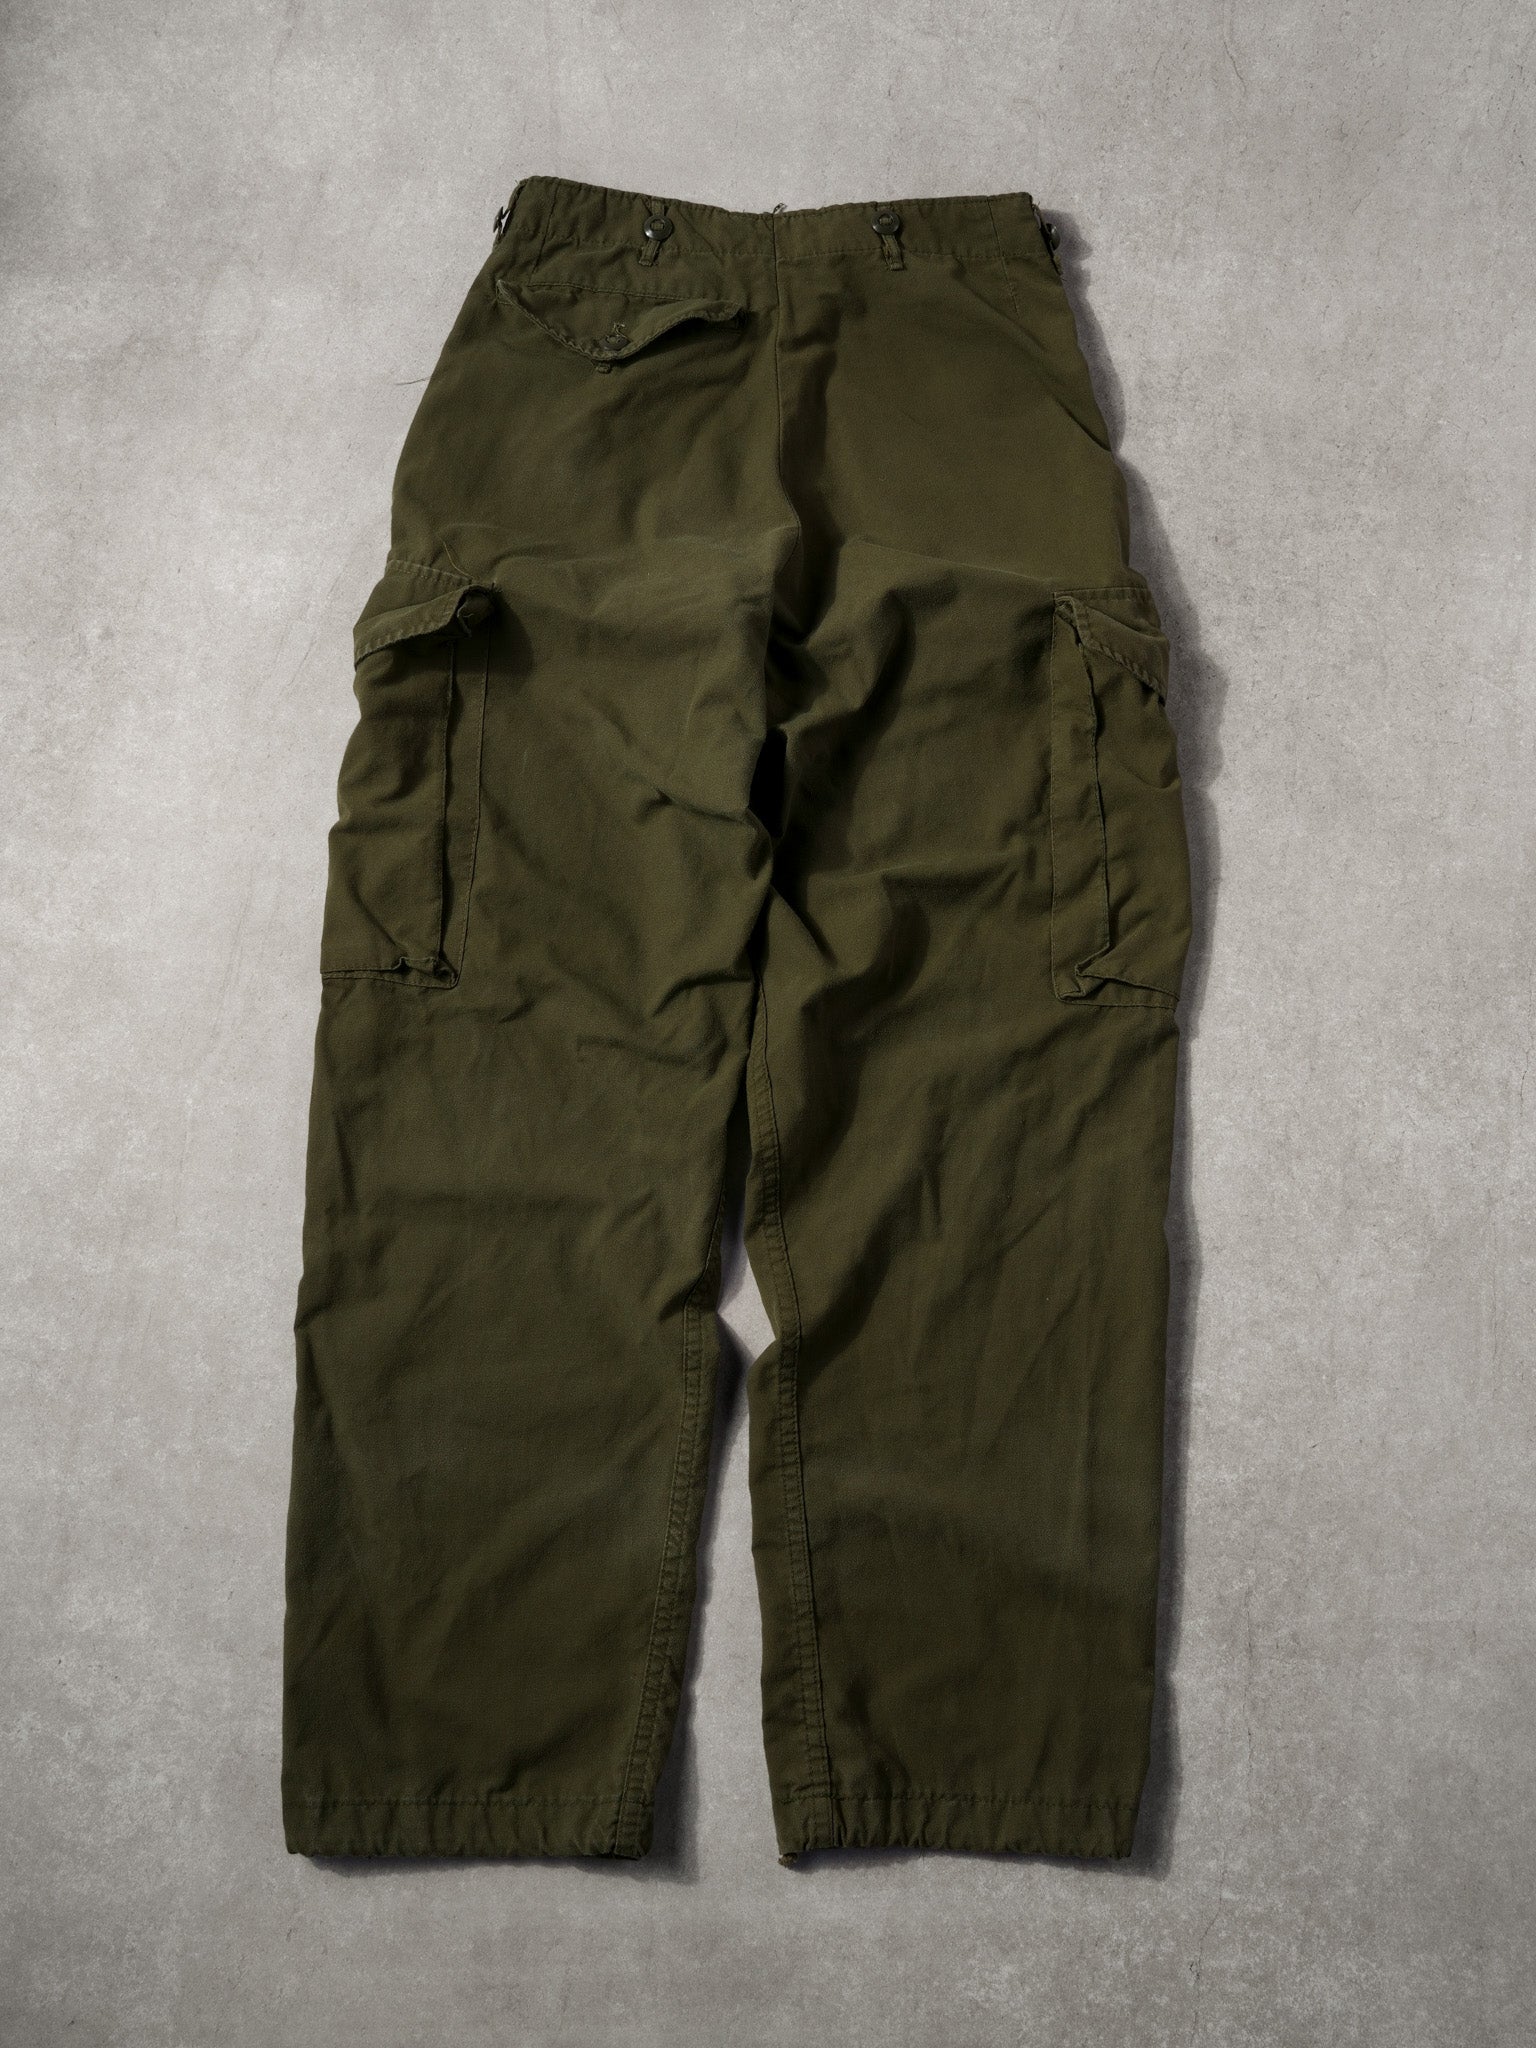 Vintage 80s Green Army Parachute Pants (32x30)